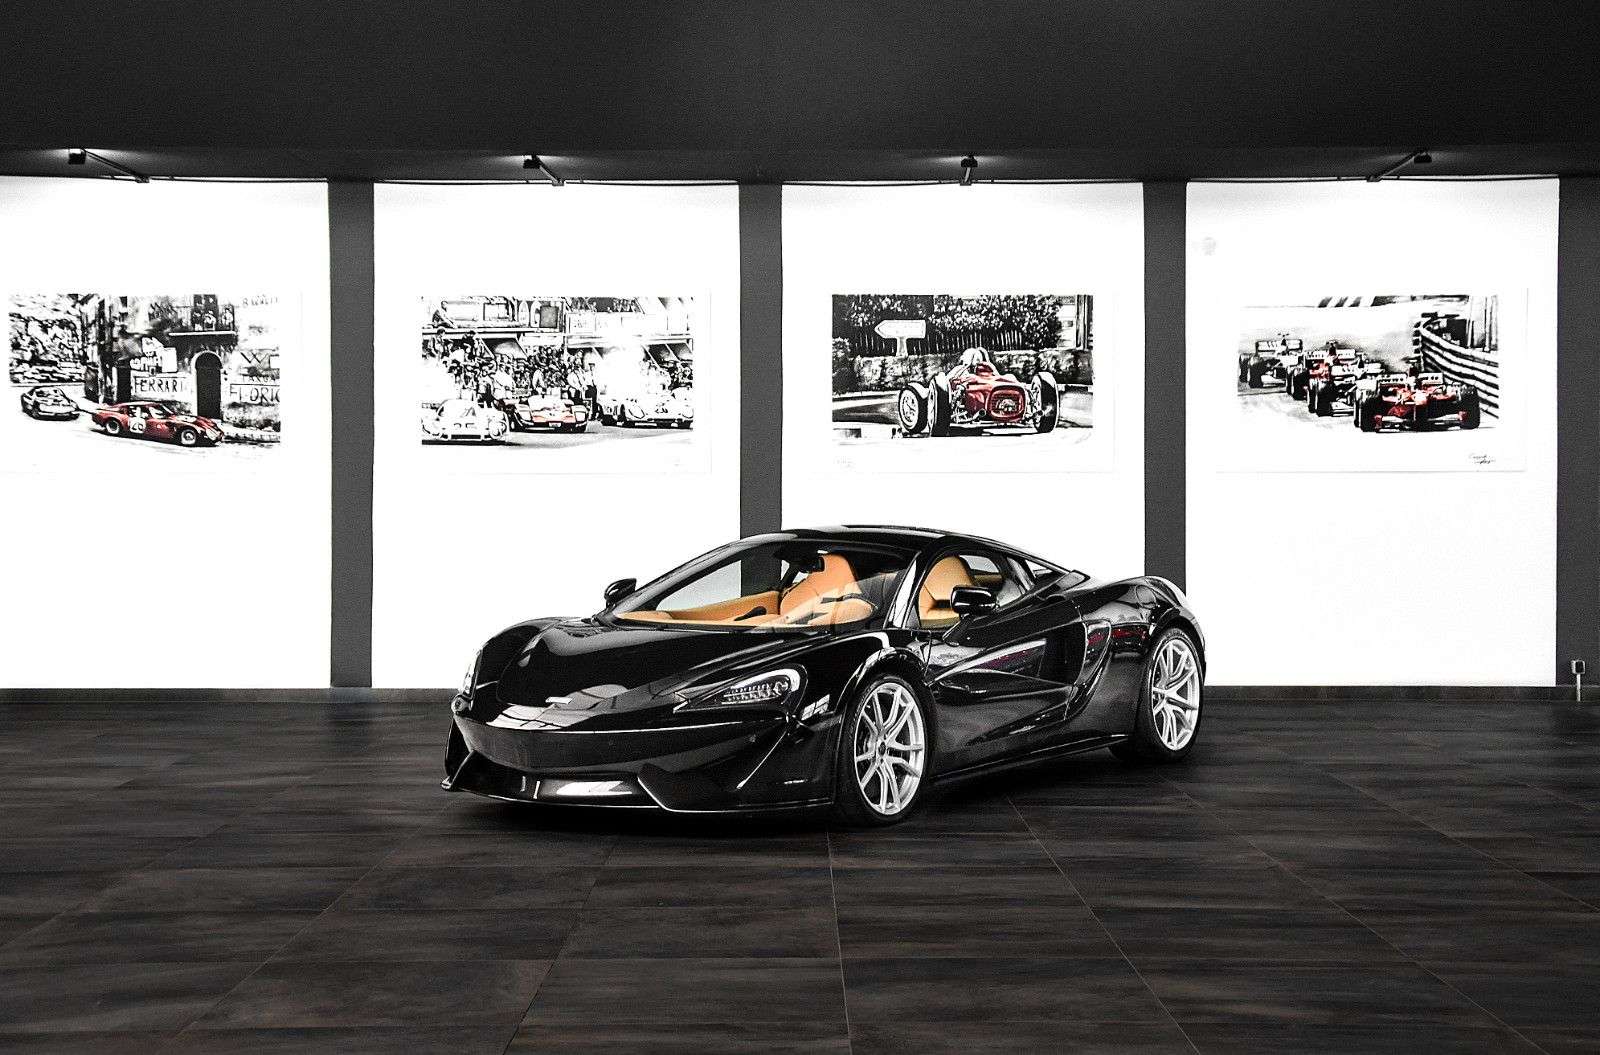 McLaren 570GT Coupe in Black used in Wiesbaden for € 154,900.-